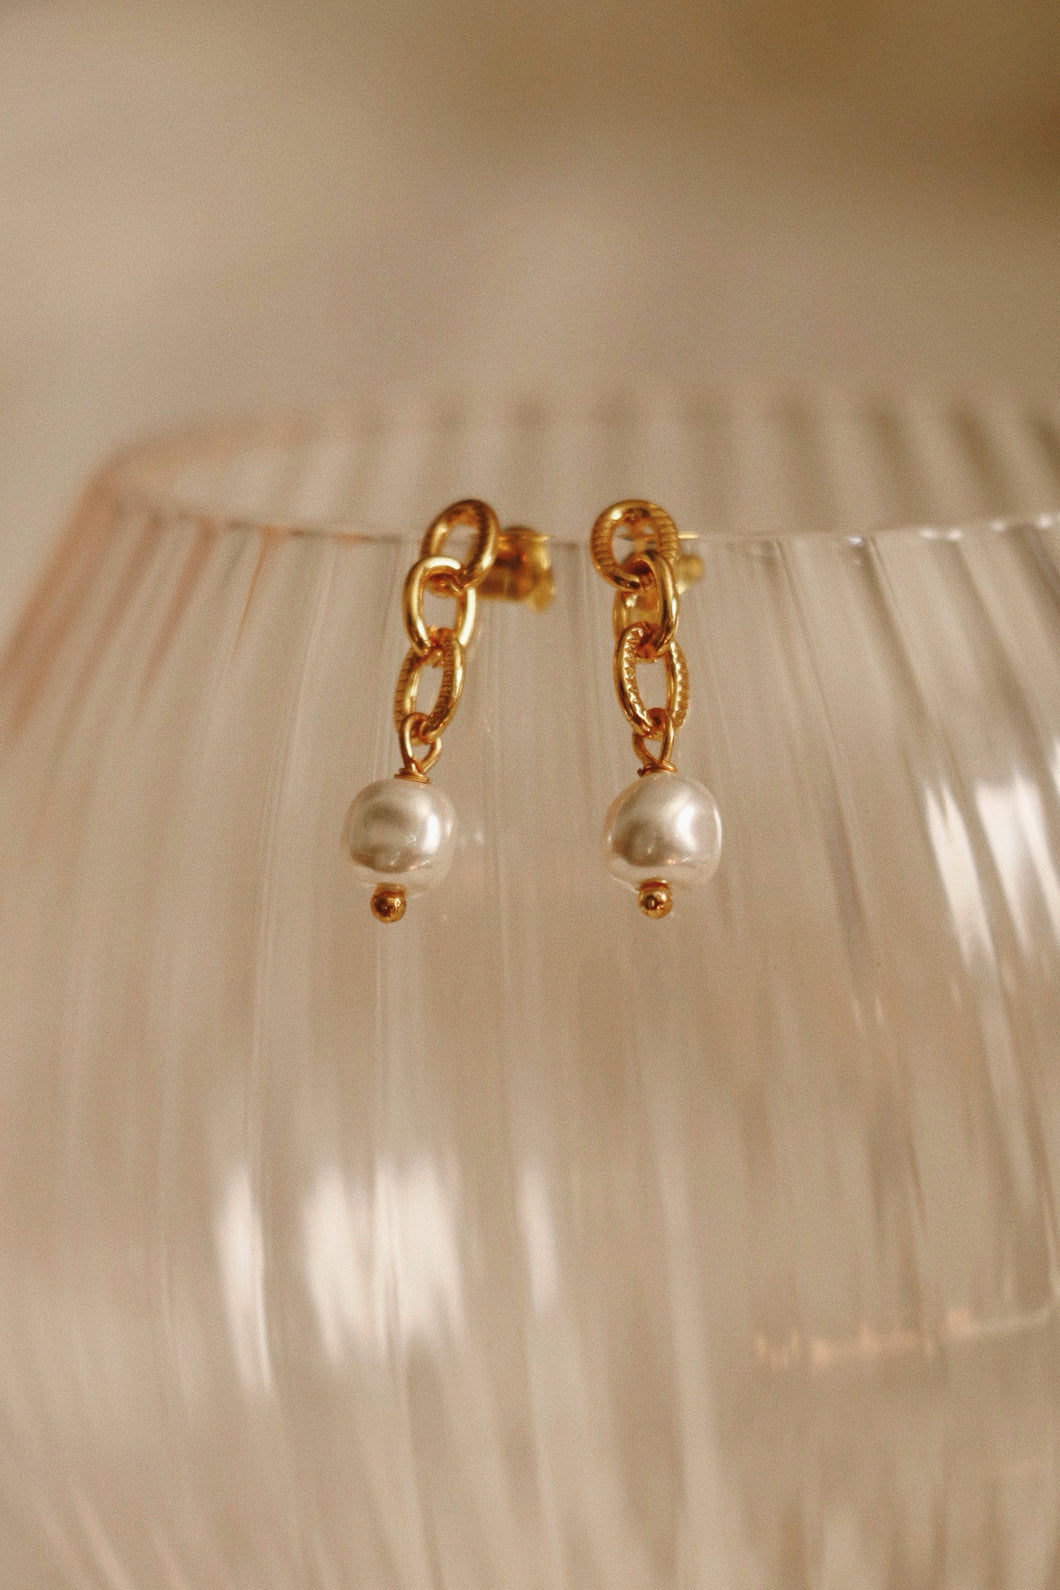 Hudson Pearl Earrings